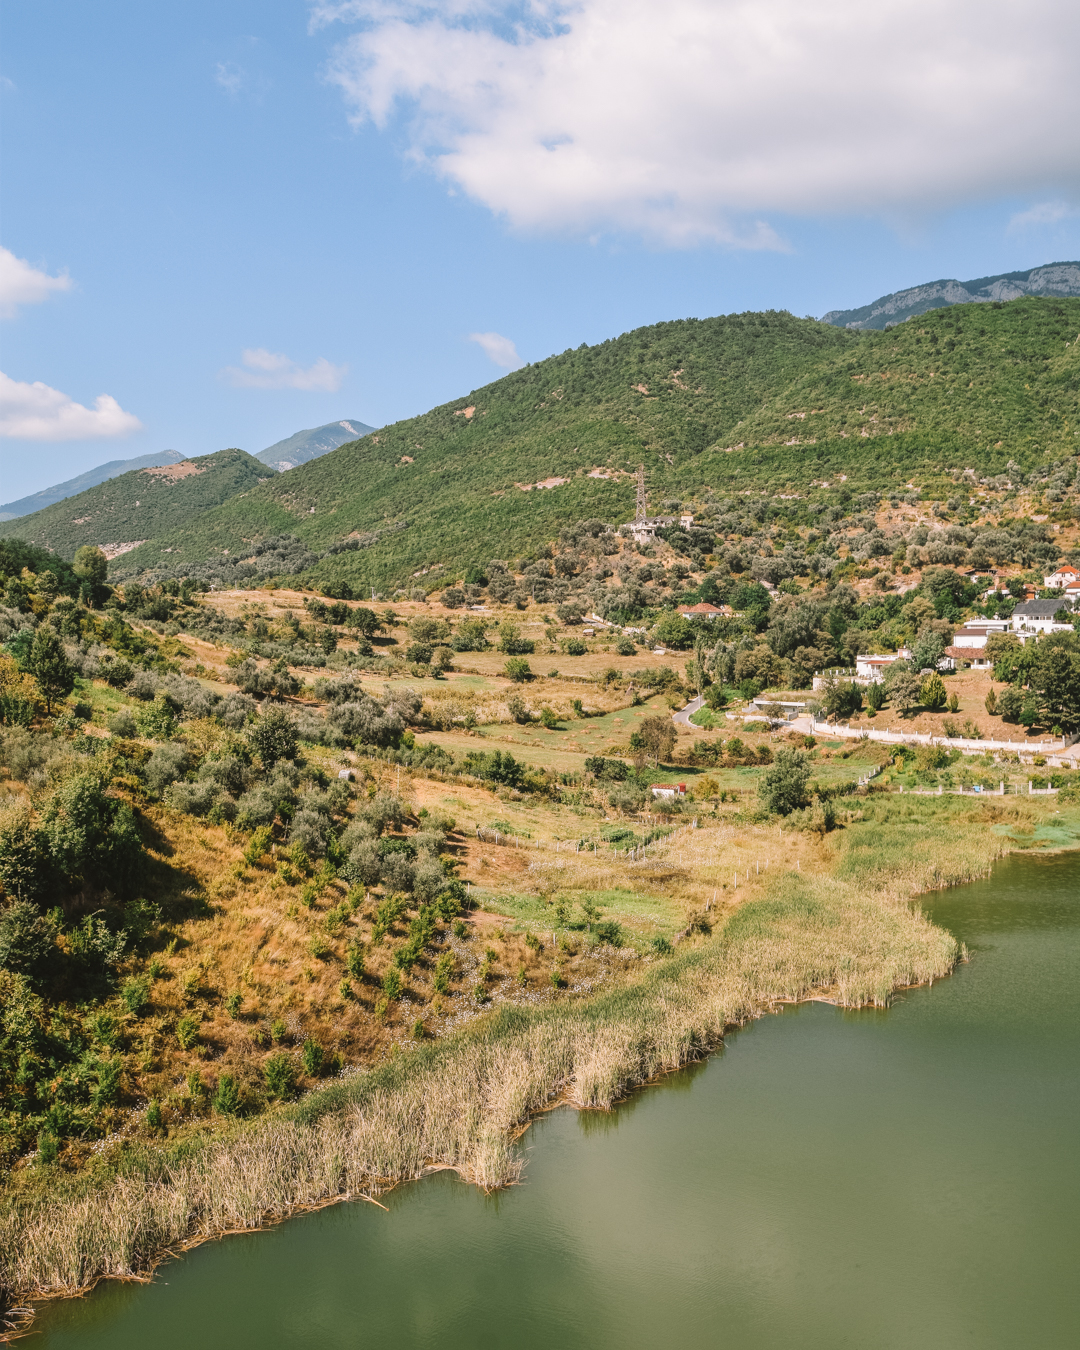 View from the Dajti Express, Tirana